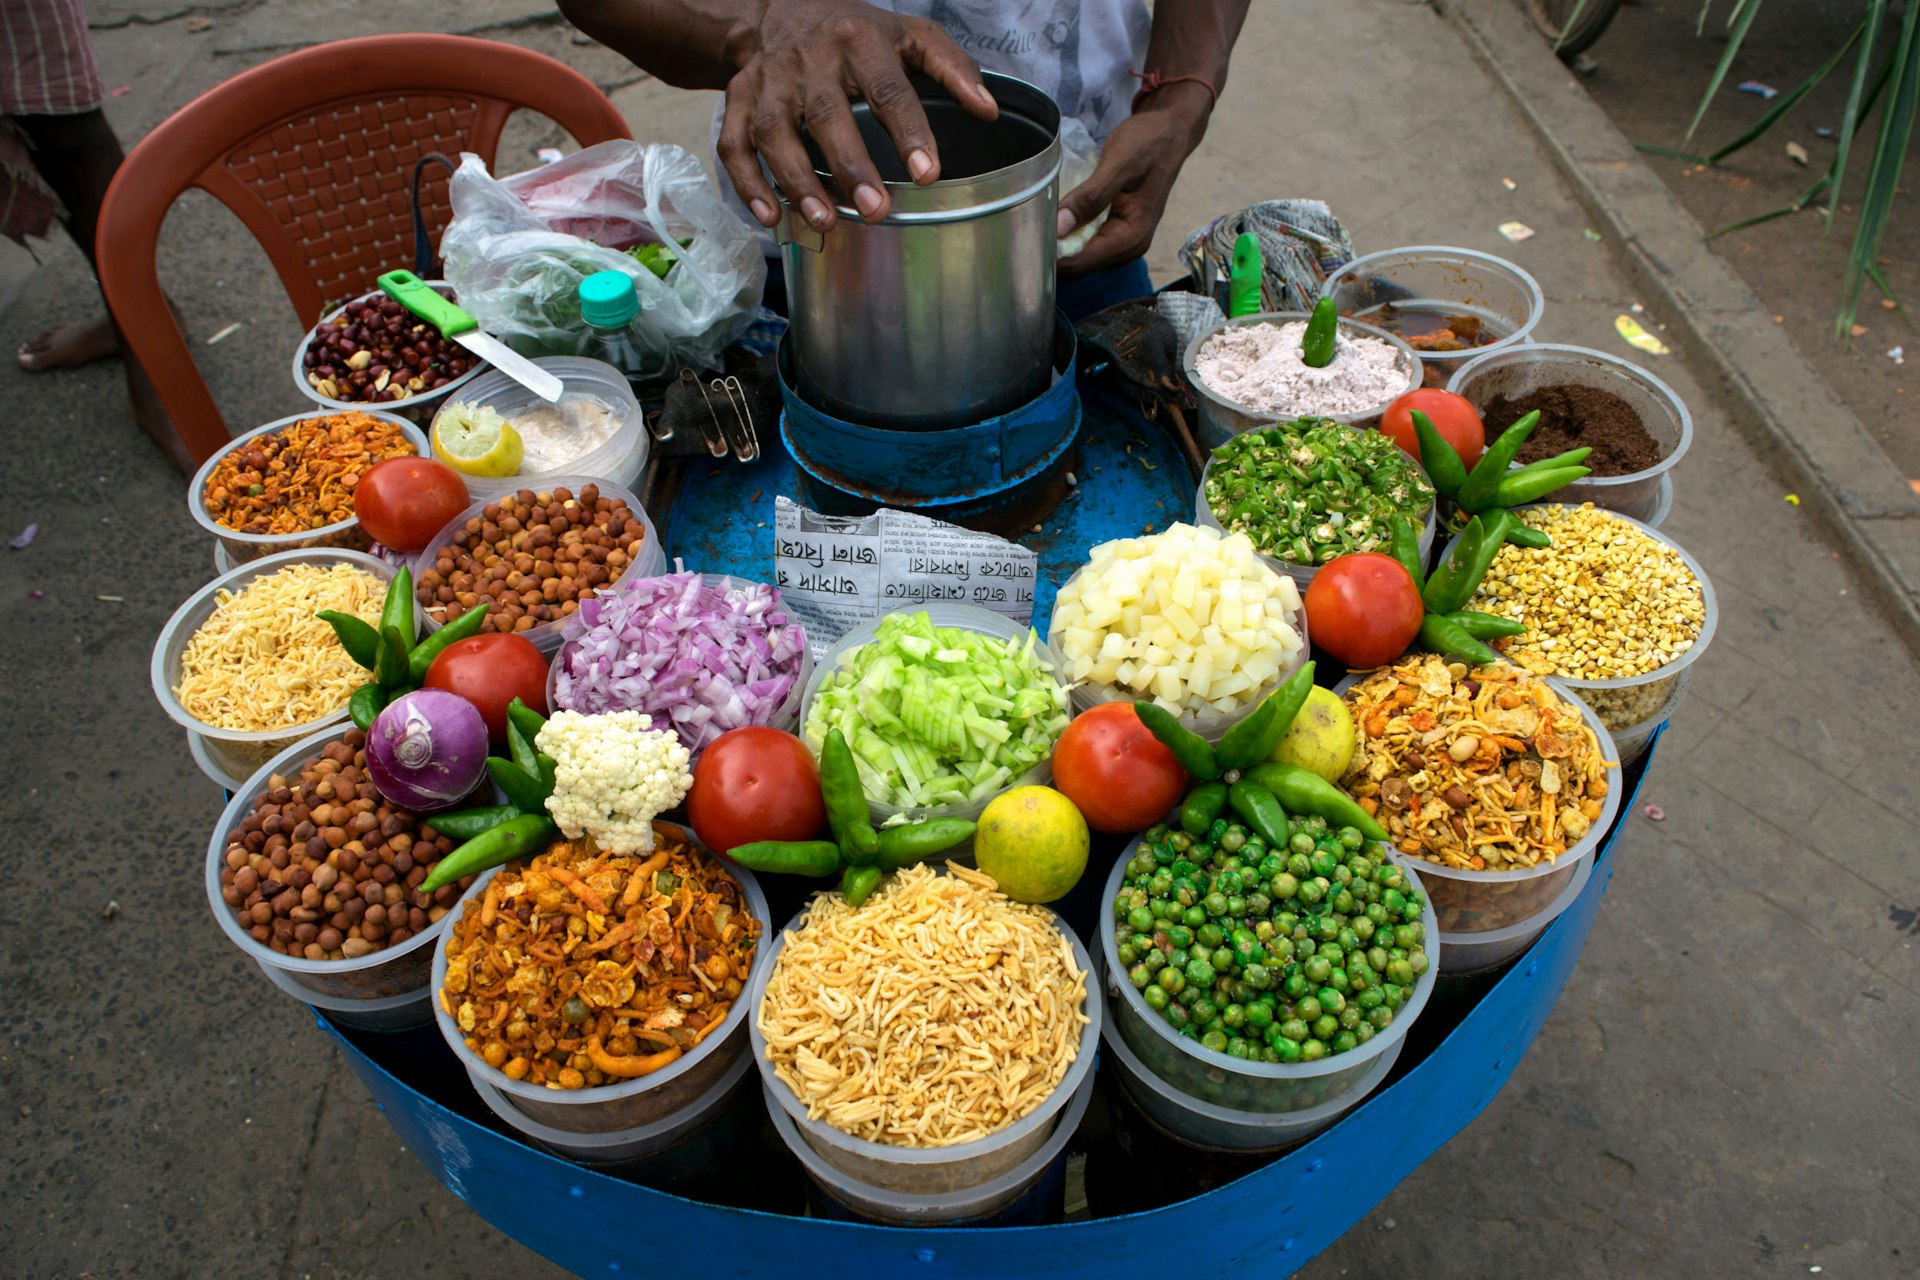 A Kolkata chaat (salad) vendor shows off his wares © India Photography / Getty Images